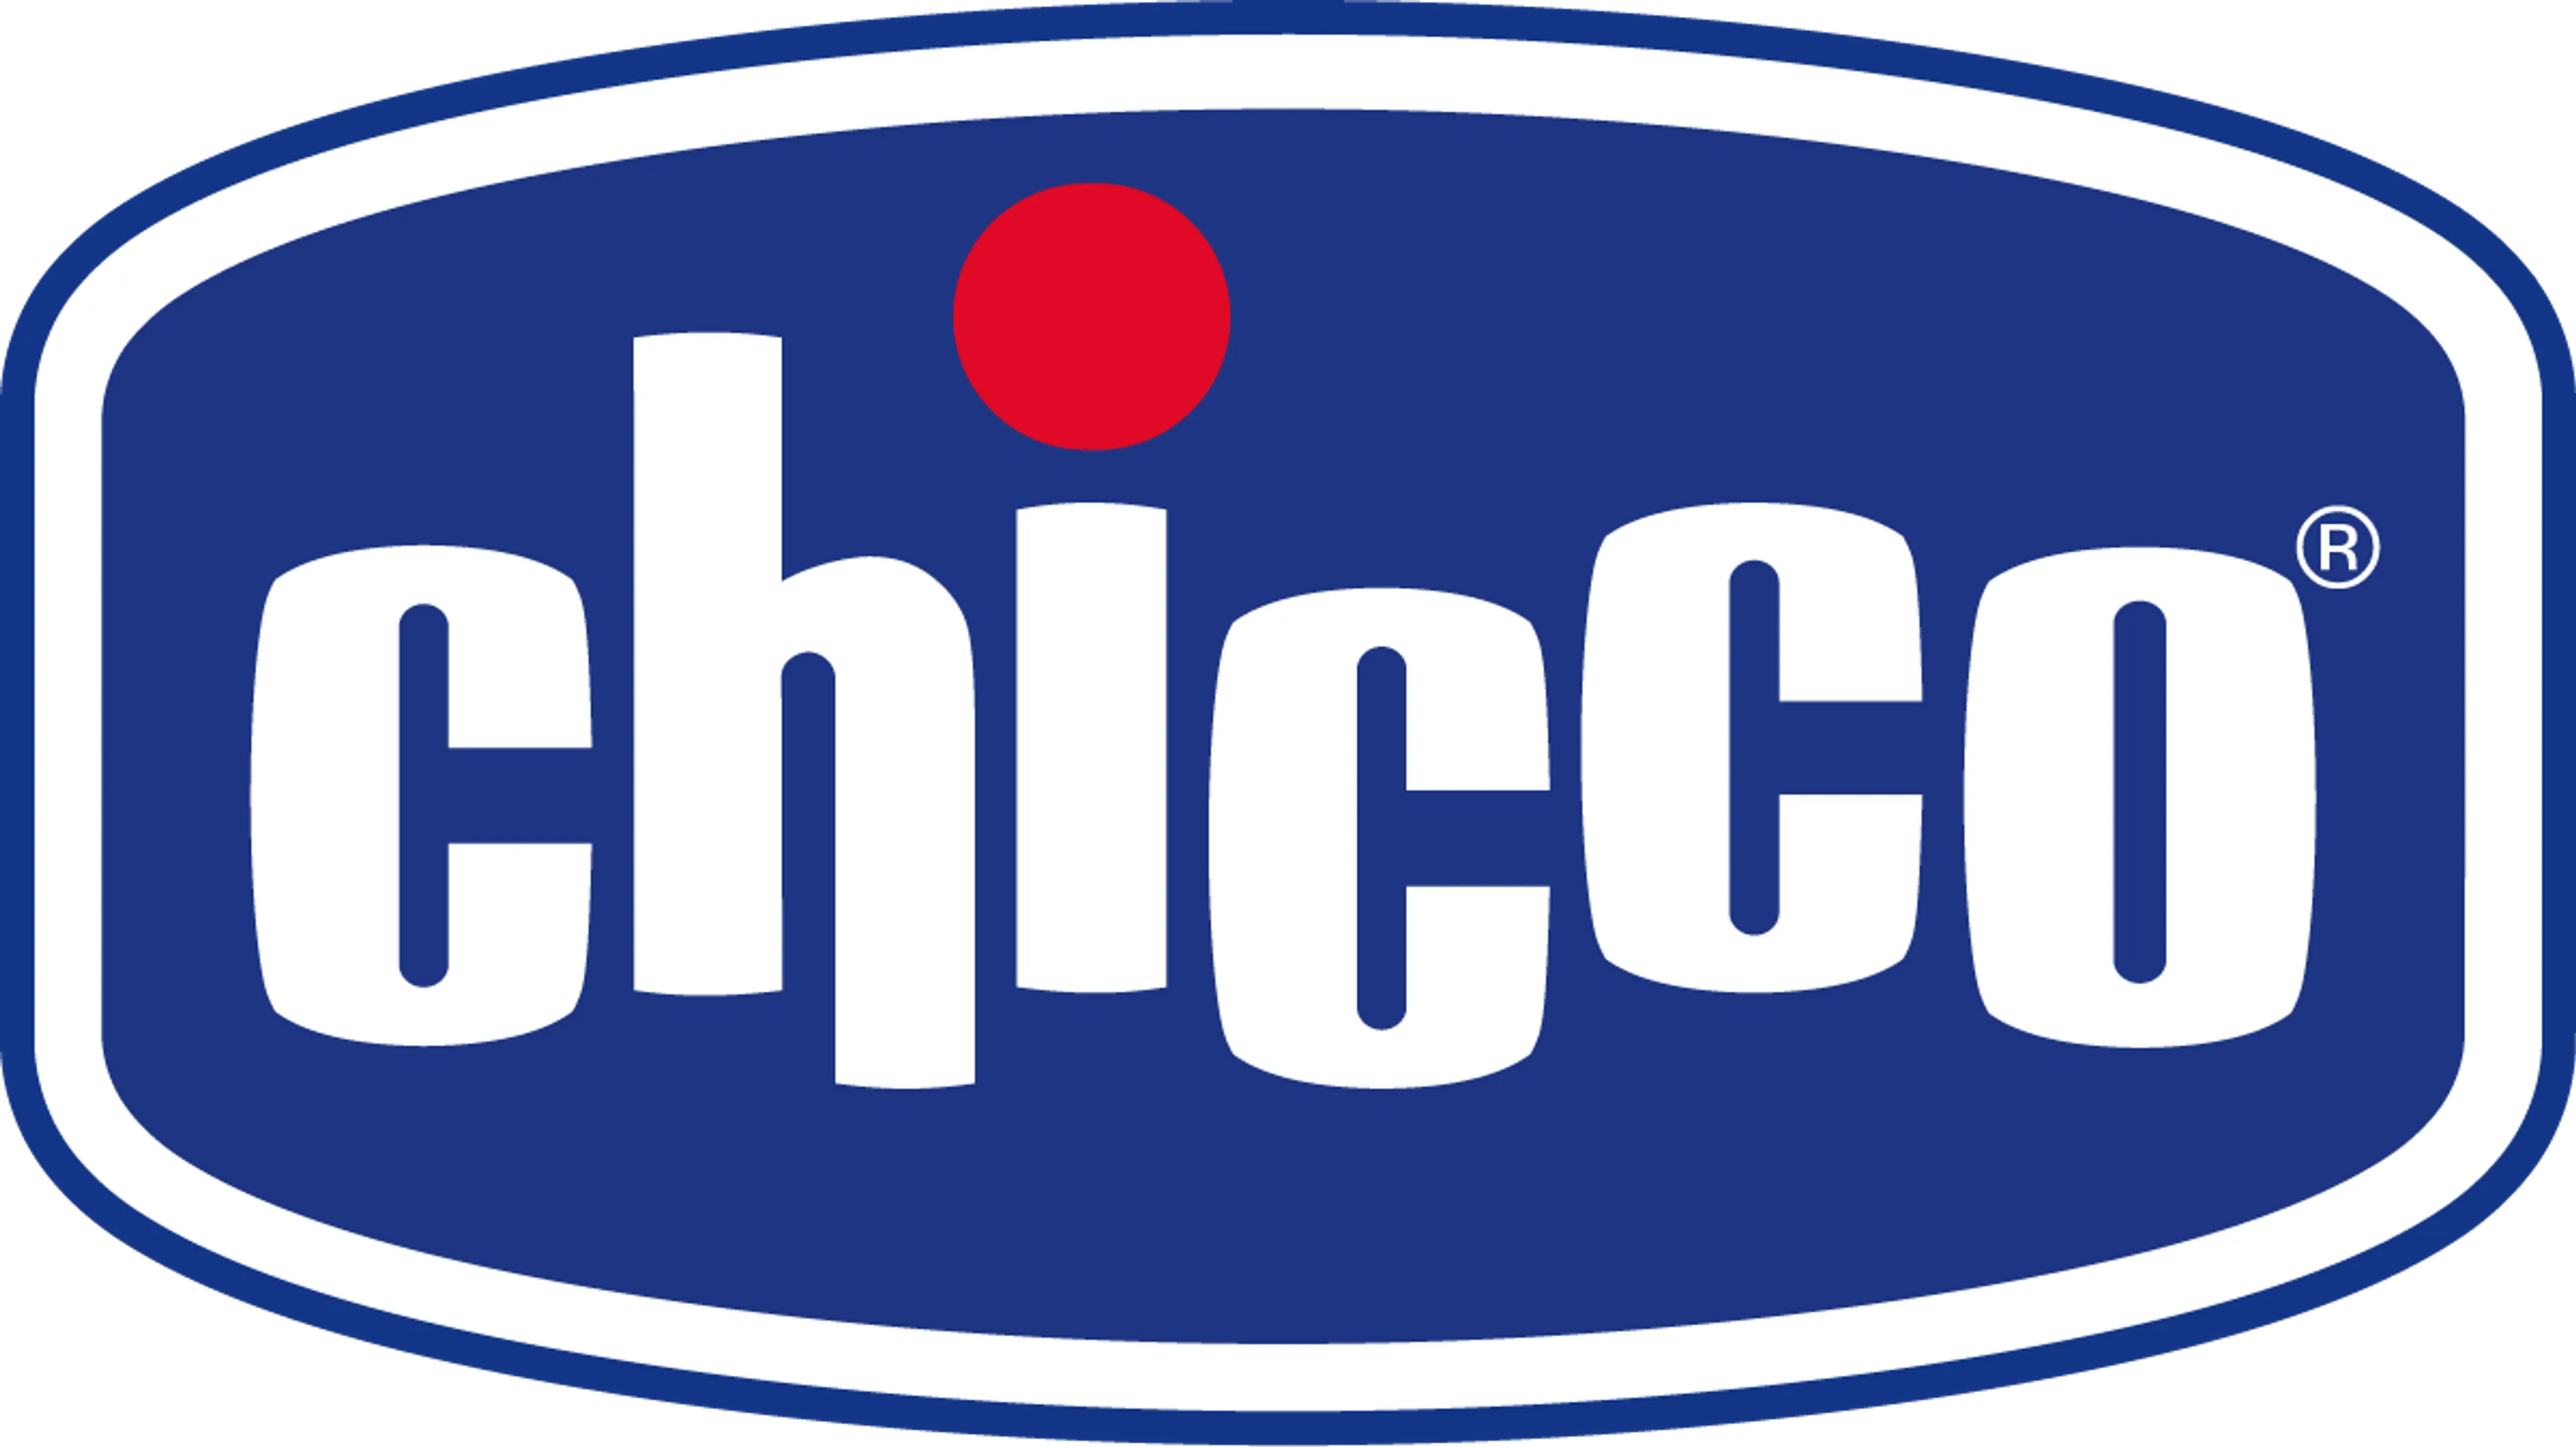 CHICCO logo